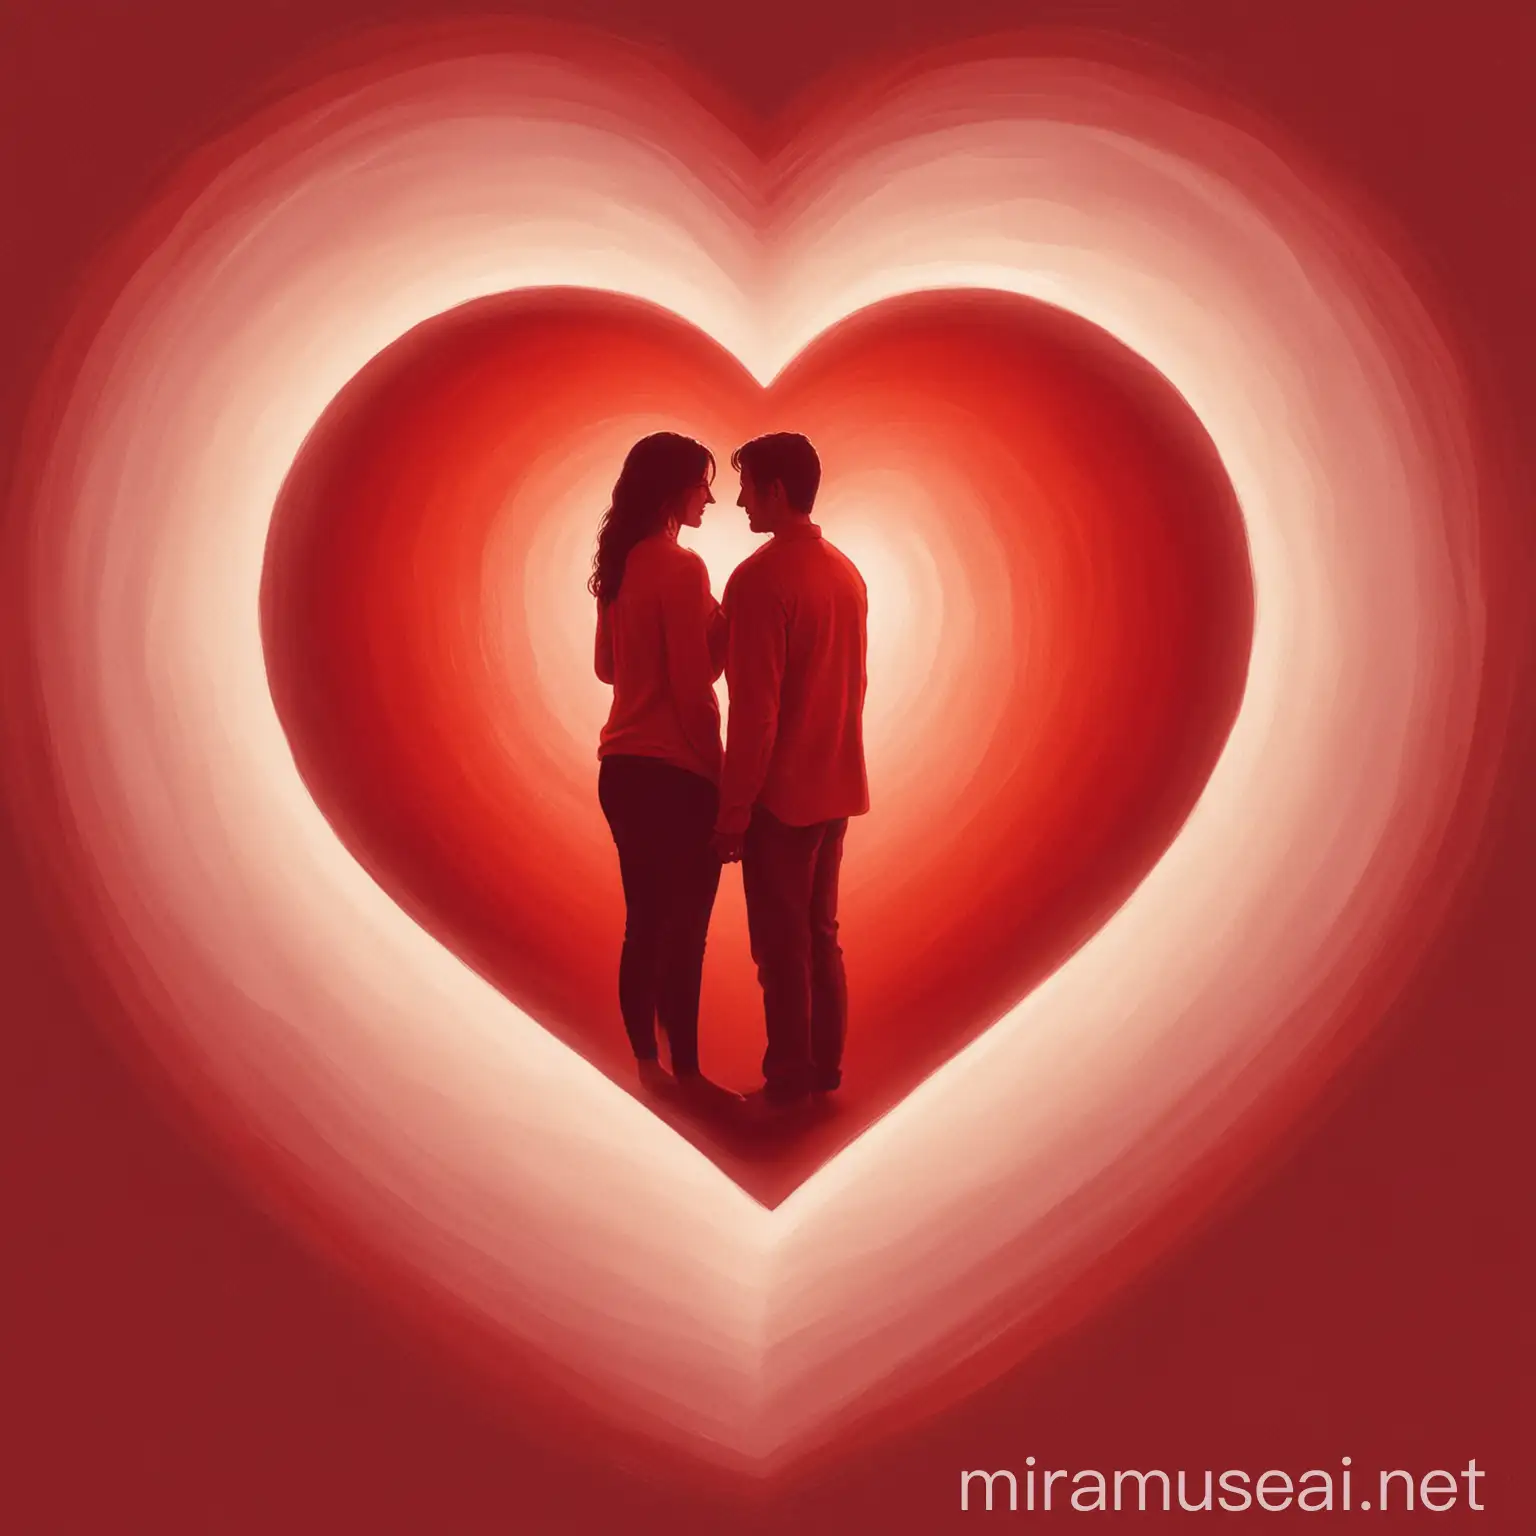 Serene Couple Embraced Inside Red Heart Romantic Love Portrait